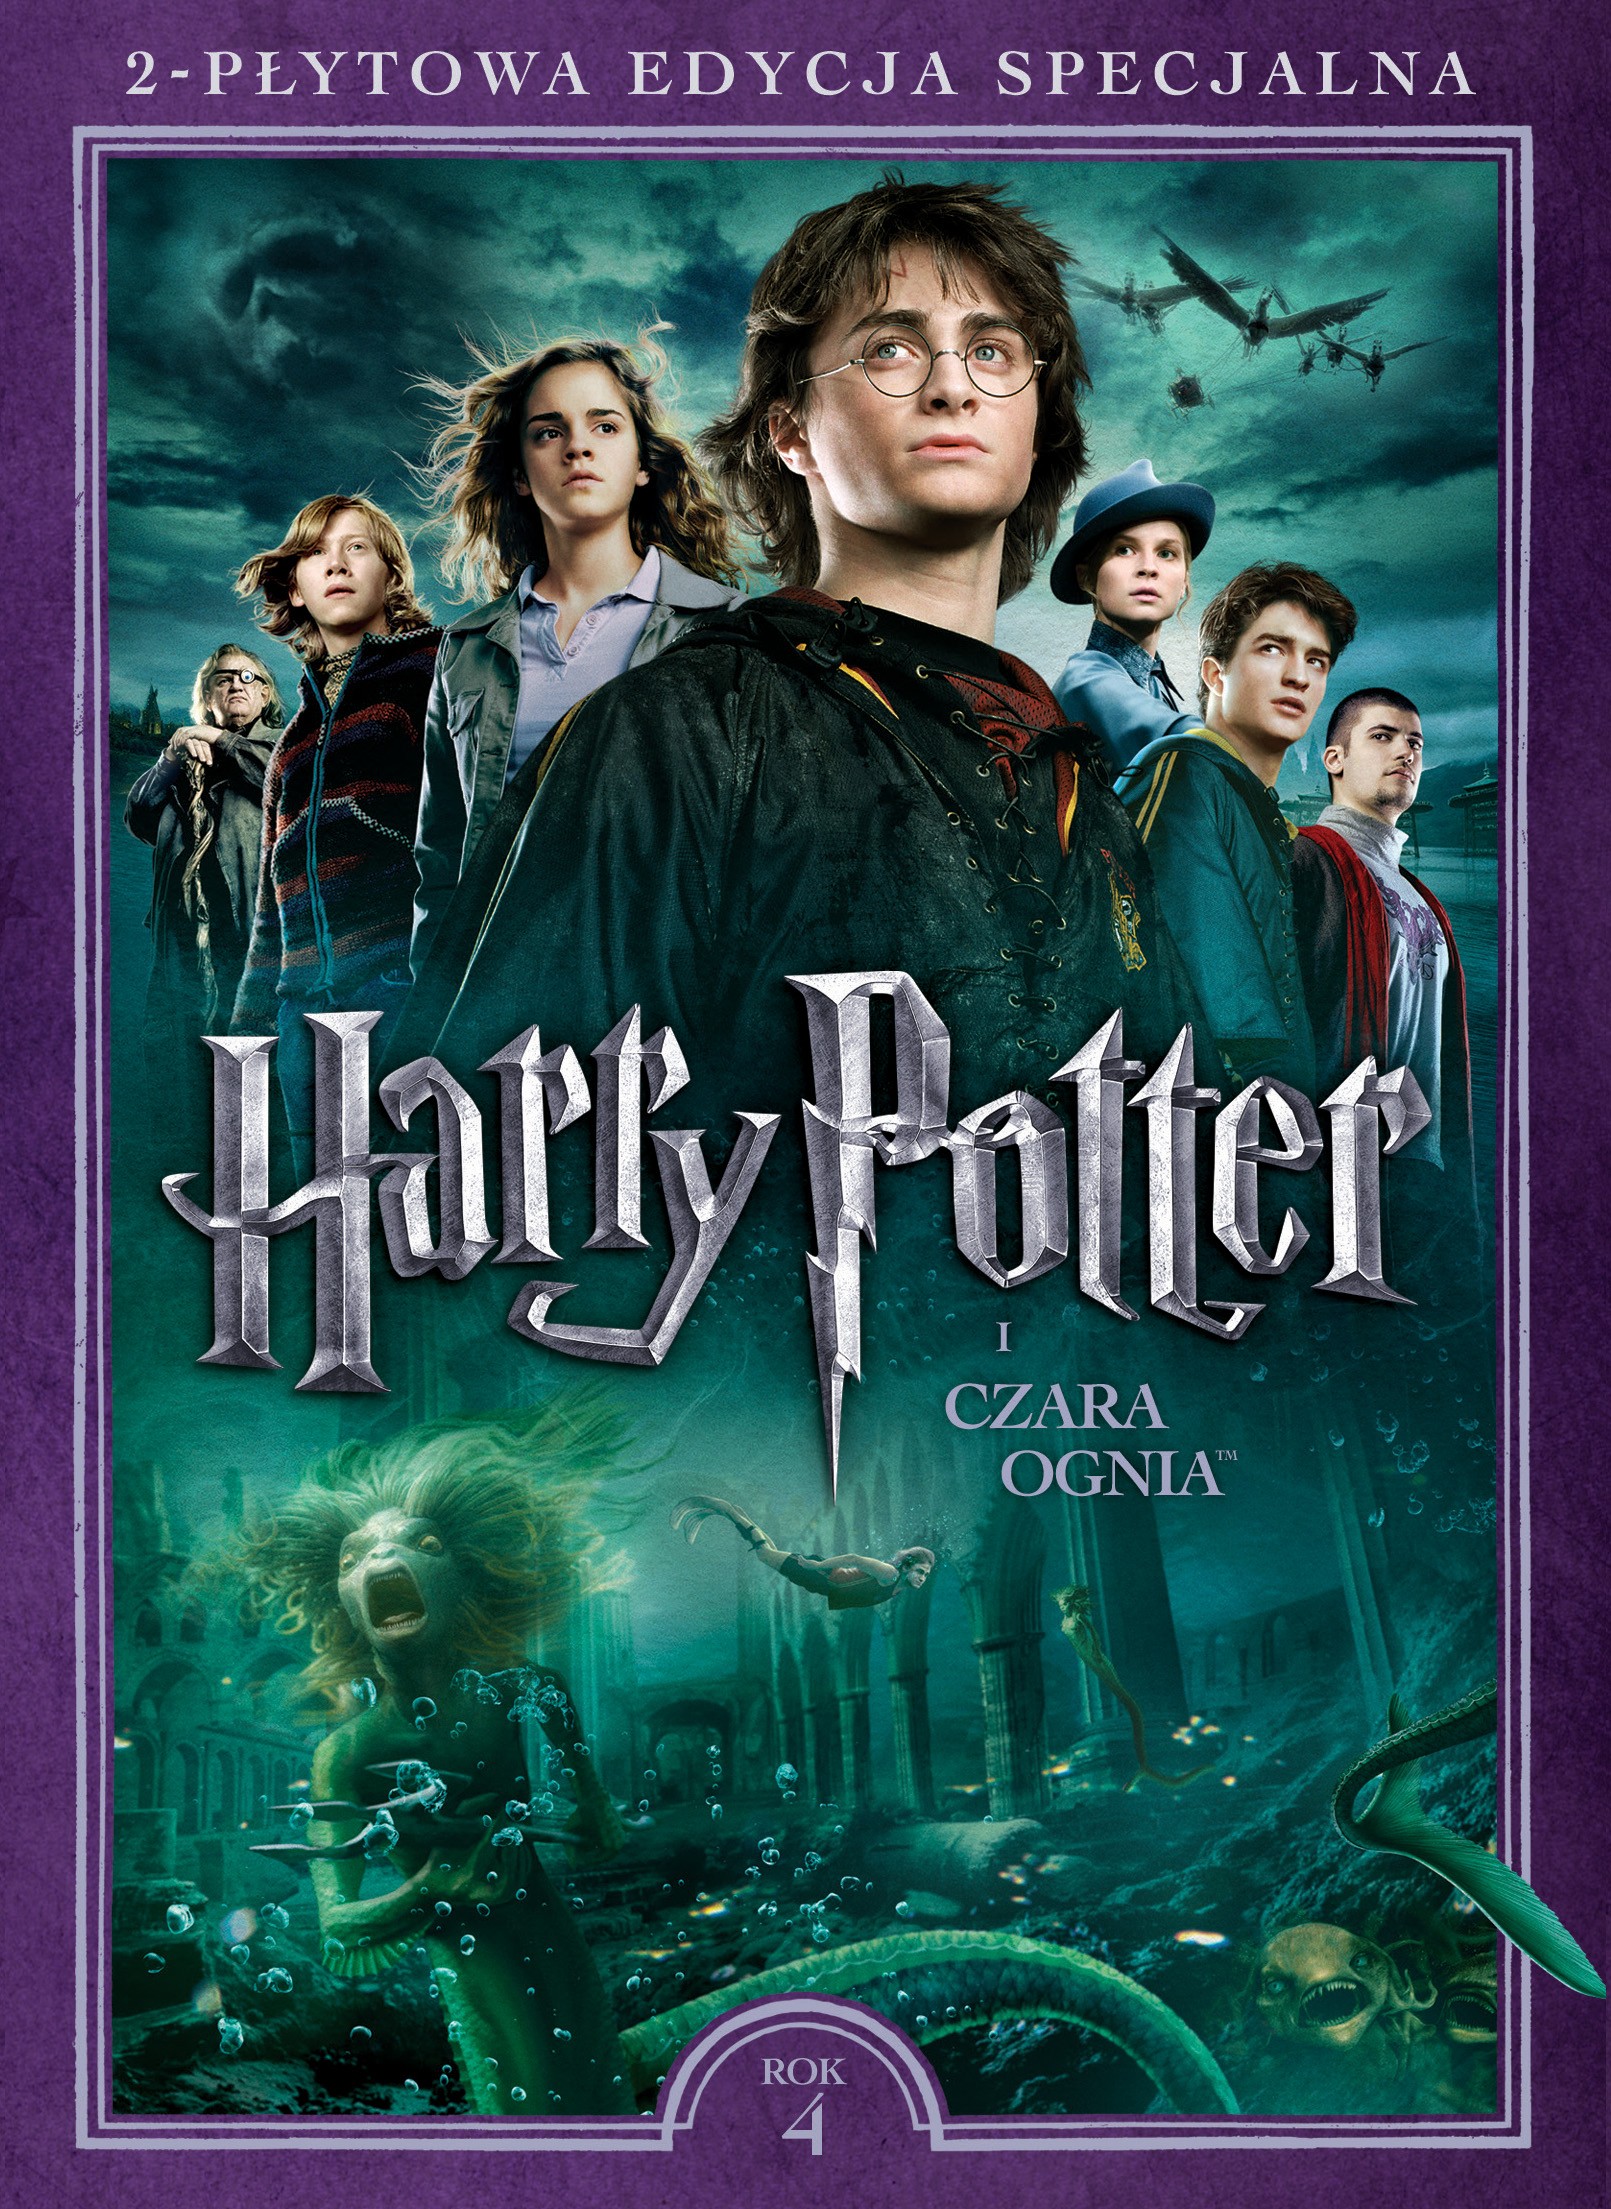 _pressroom_materialy_1_Harry_Potter4_DVD_2D.jpg